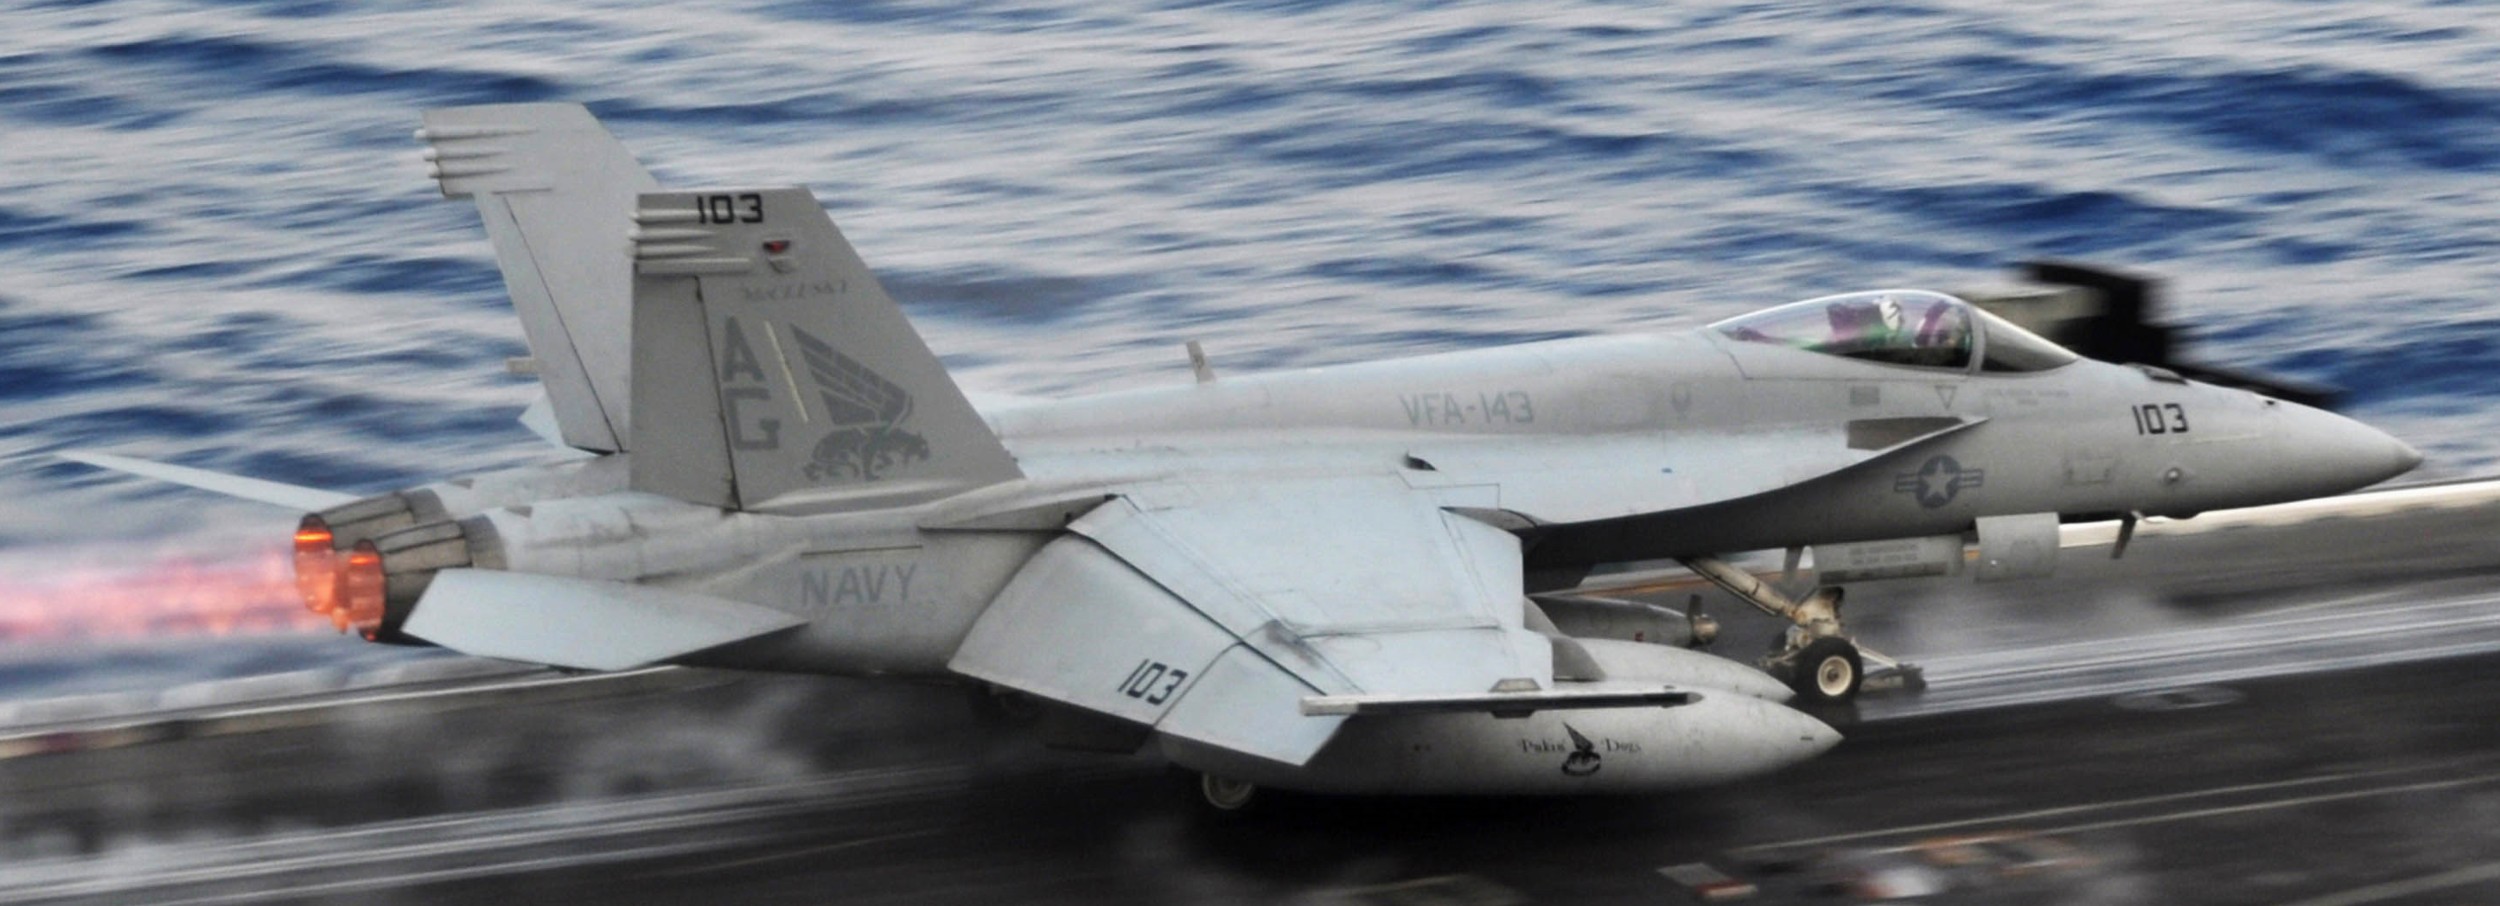 vfa-143 pukin dogs strike fighter squadron f/a-18e super hornet cvw-7 uss dwight d. eisenhower cvn-69 2012 34